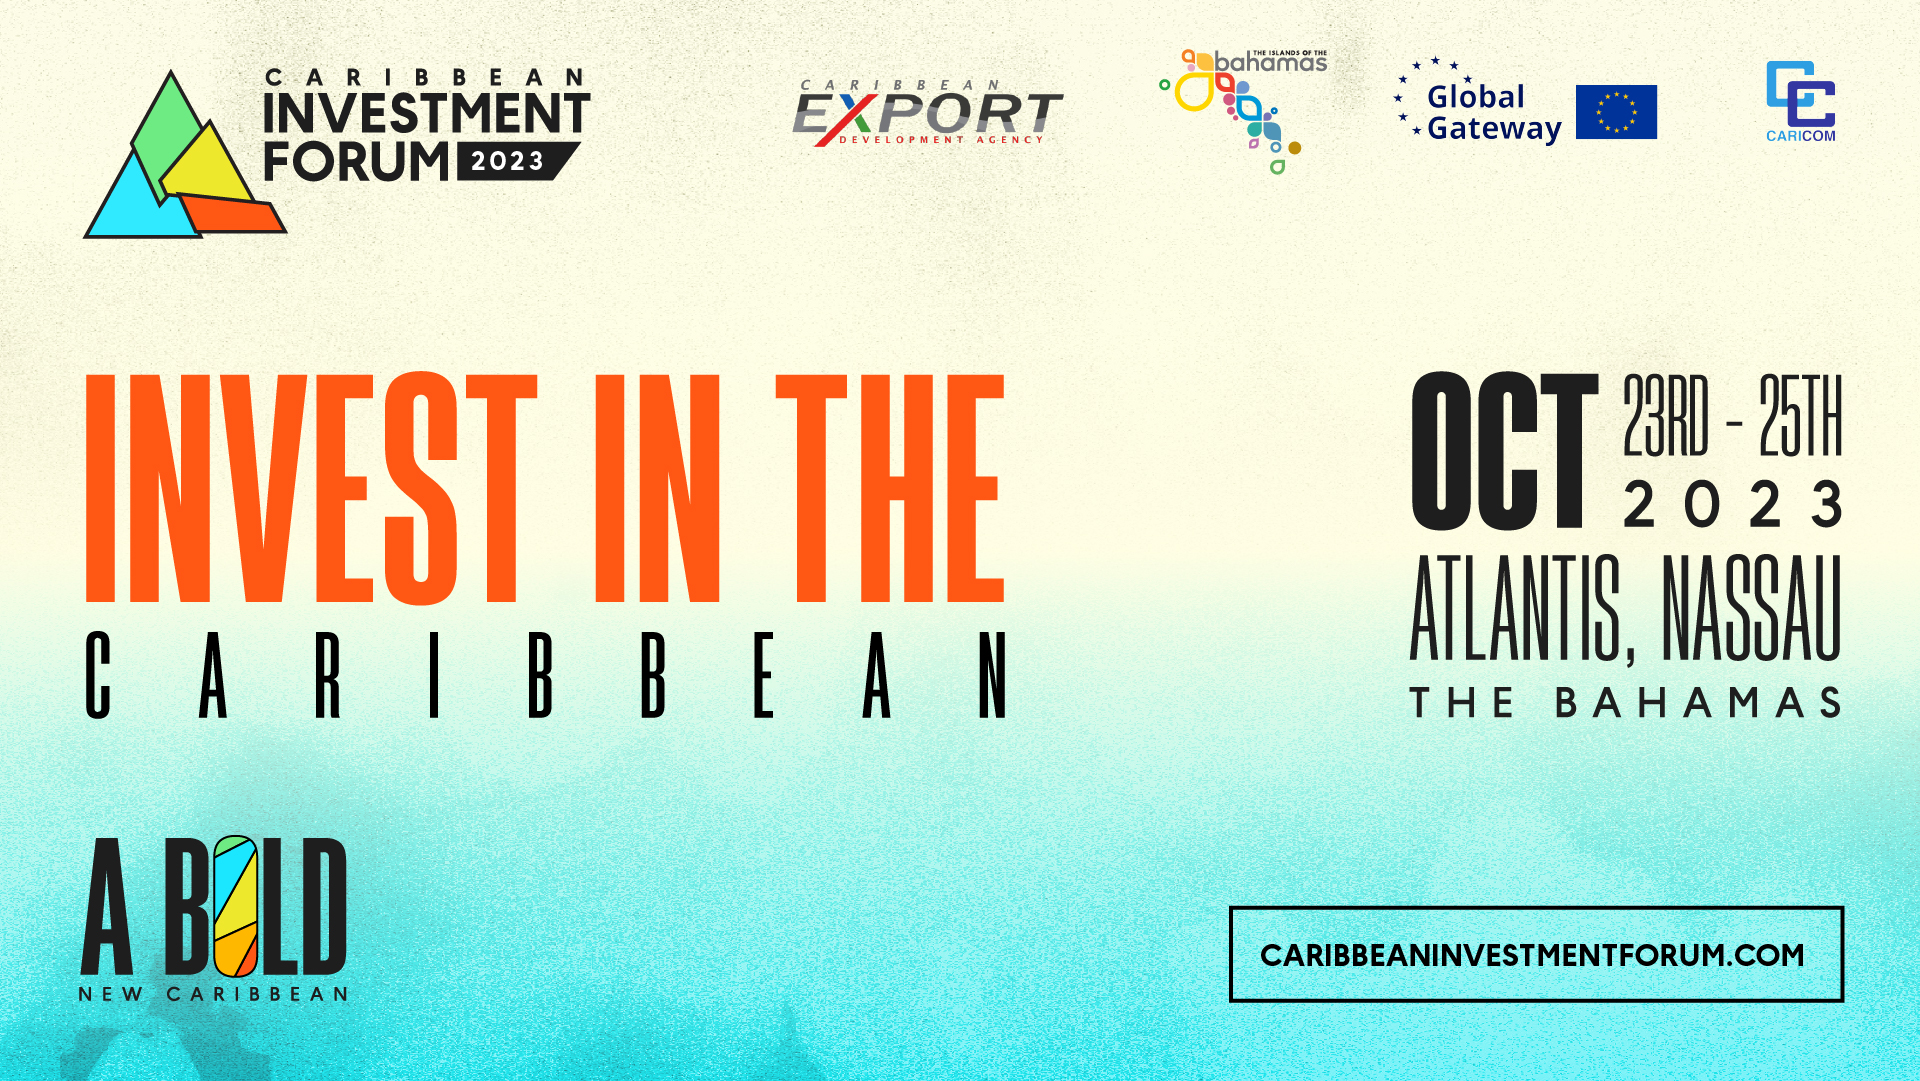 Forum d’investissement des Caraïbes 2023